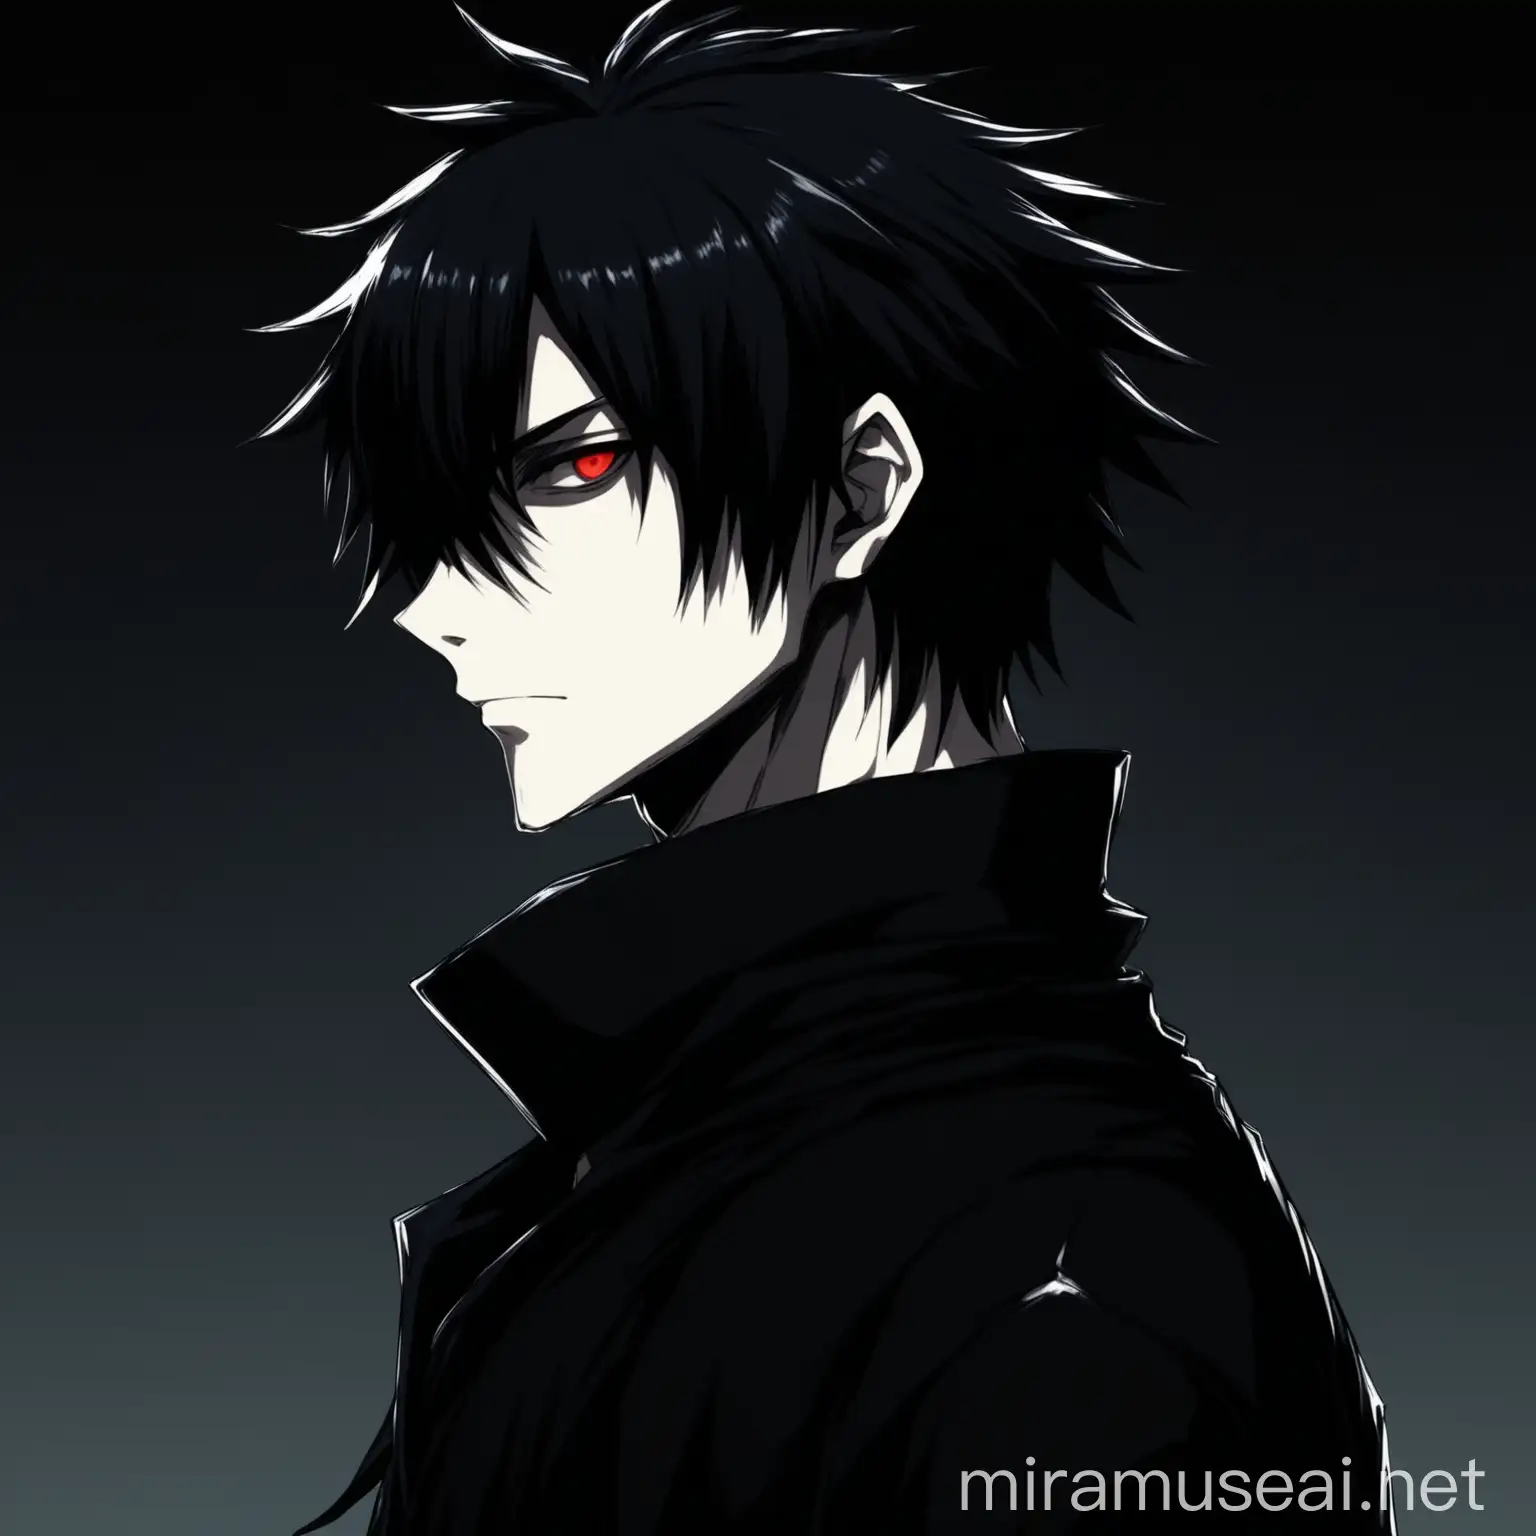 Cool Dark Anime Guy Profile Picture